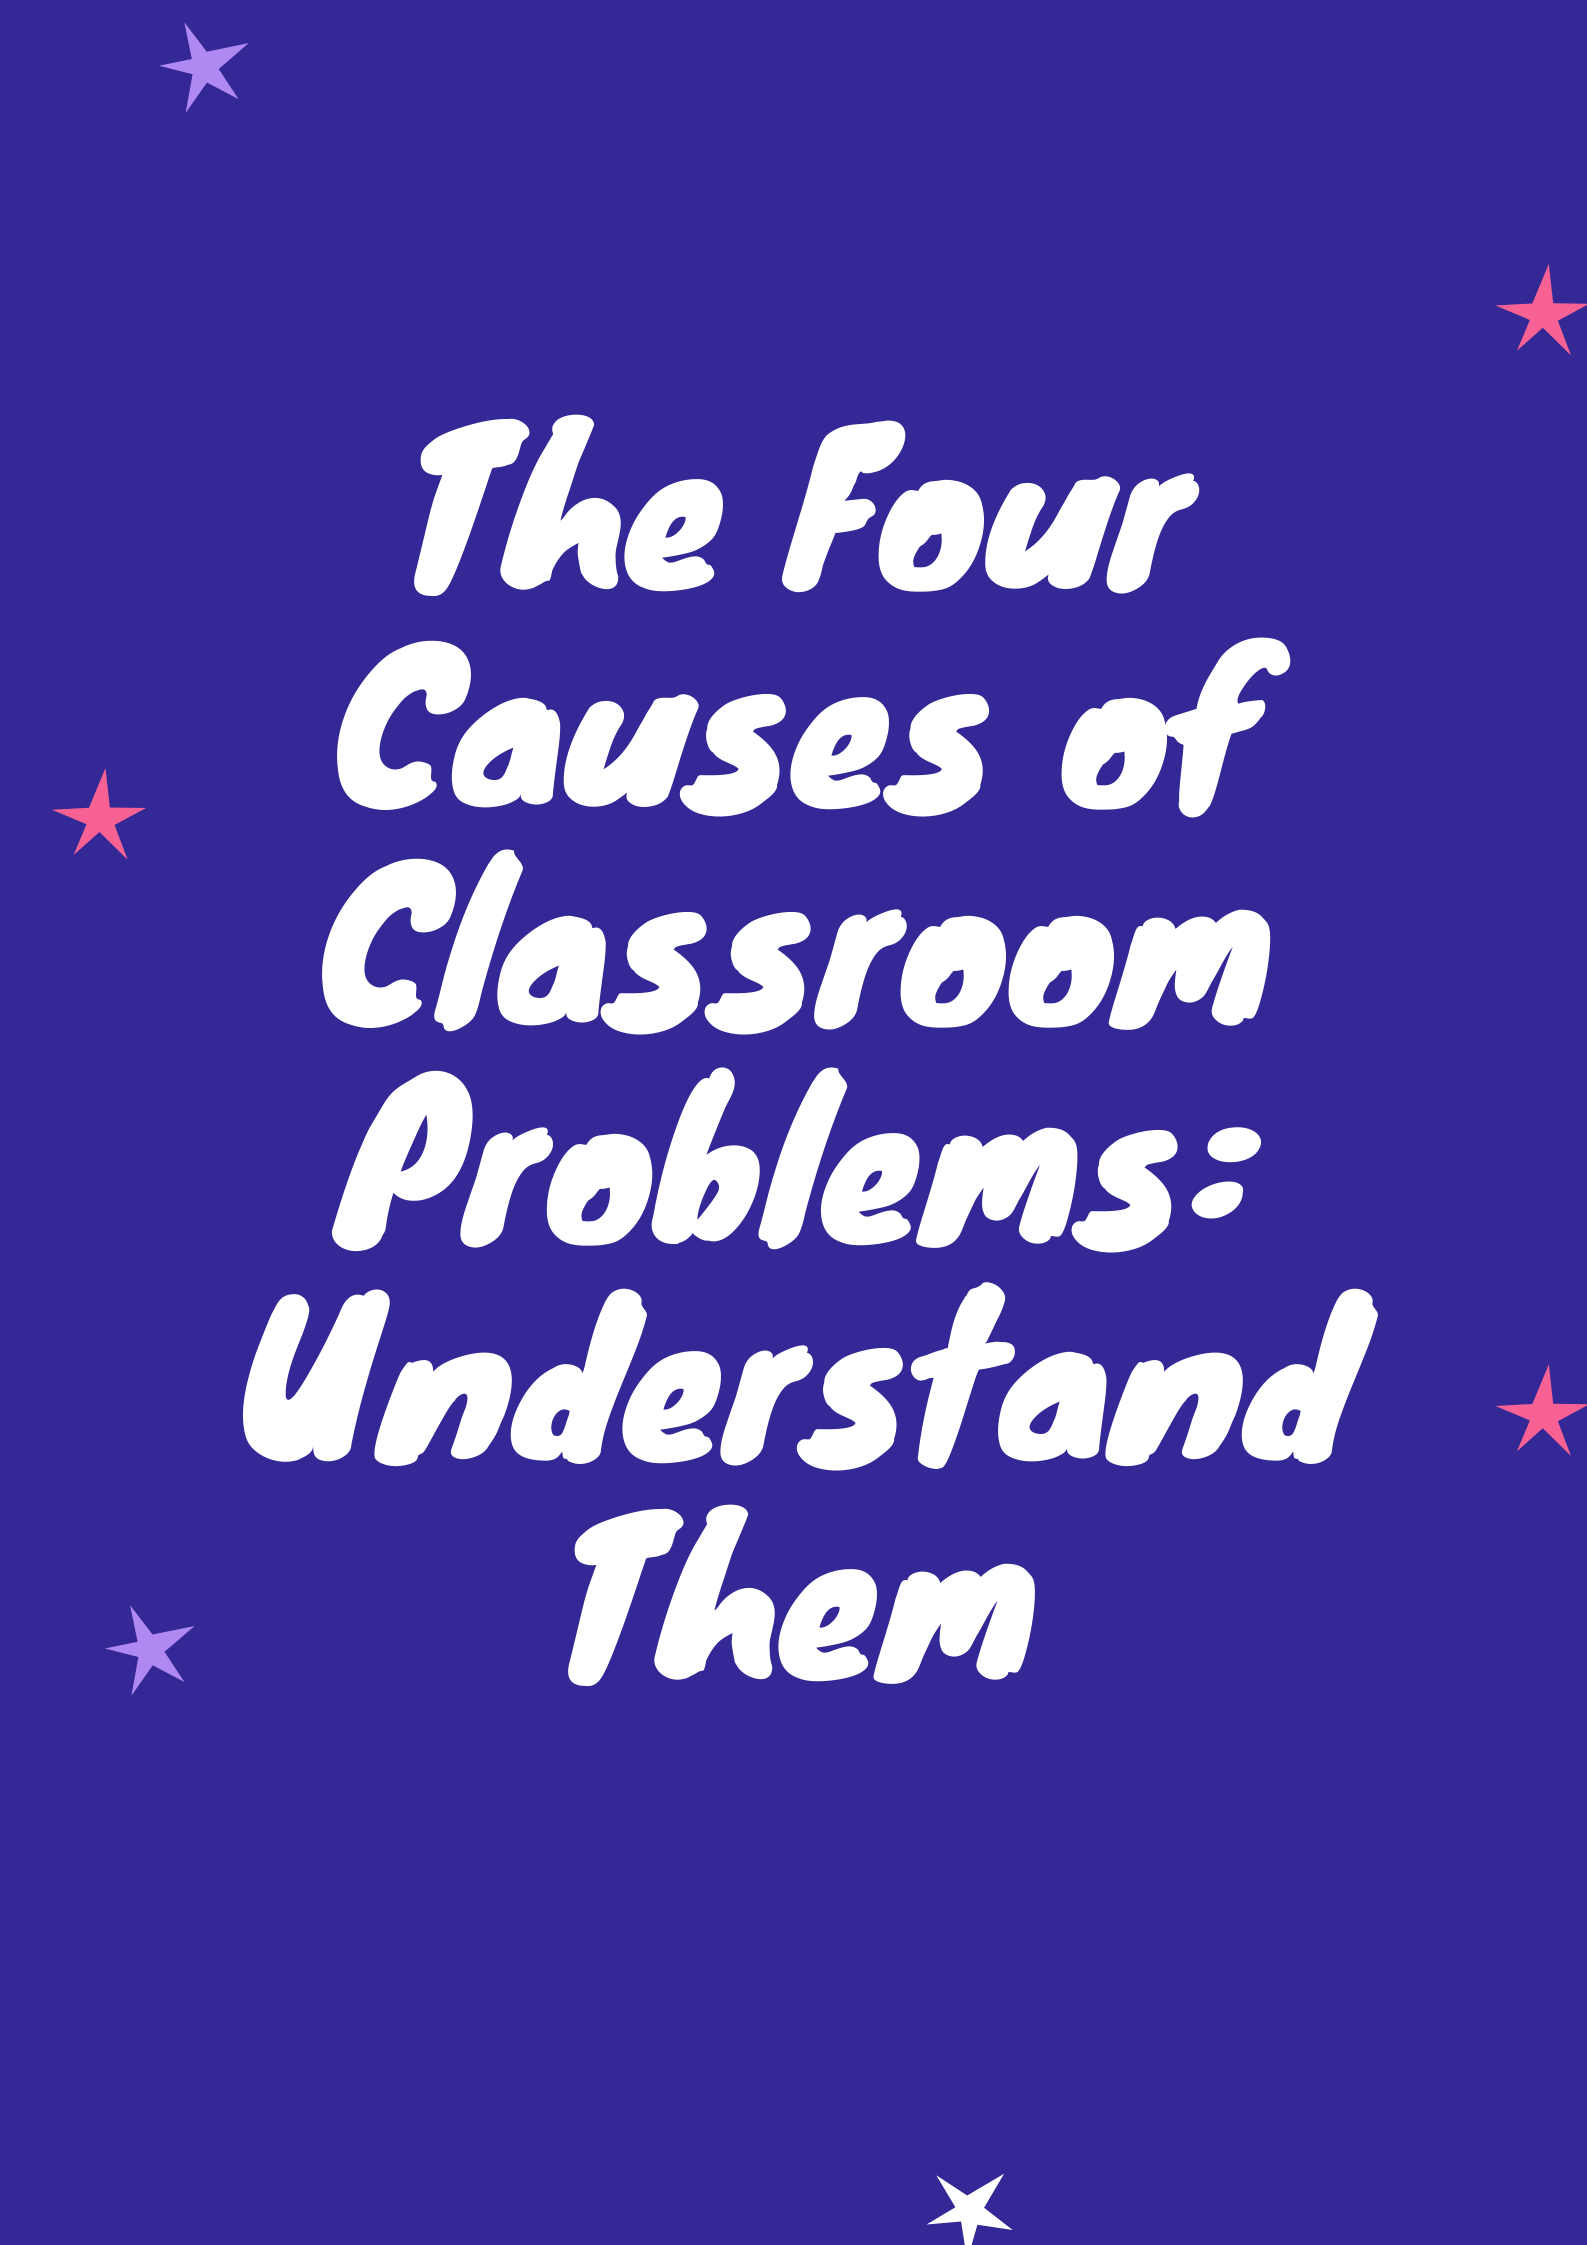 Common Classroom Management Problems Classroom Management Expert